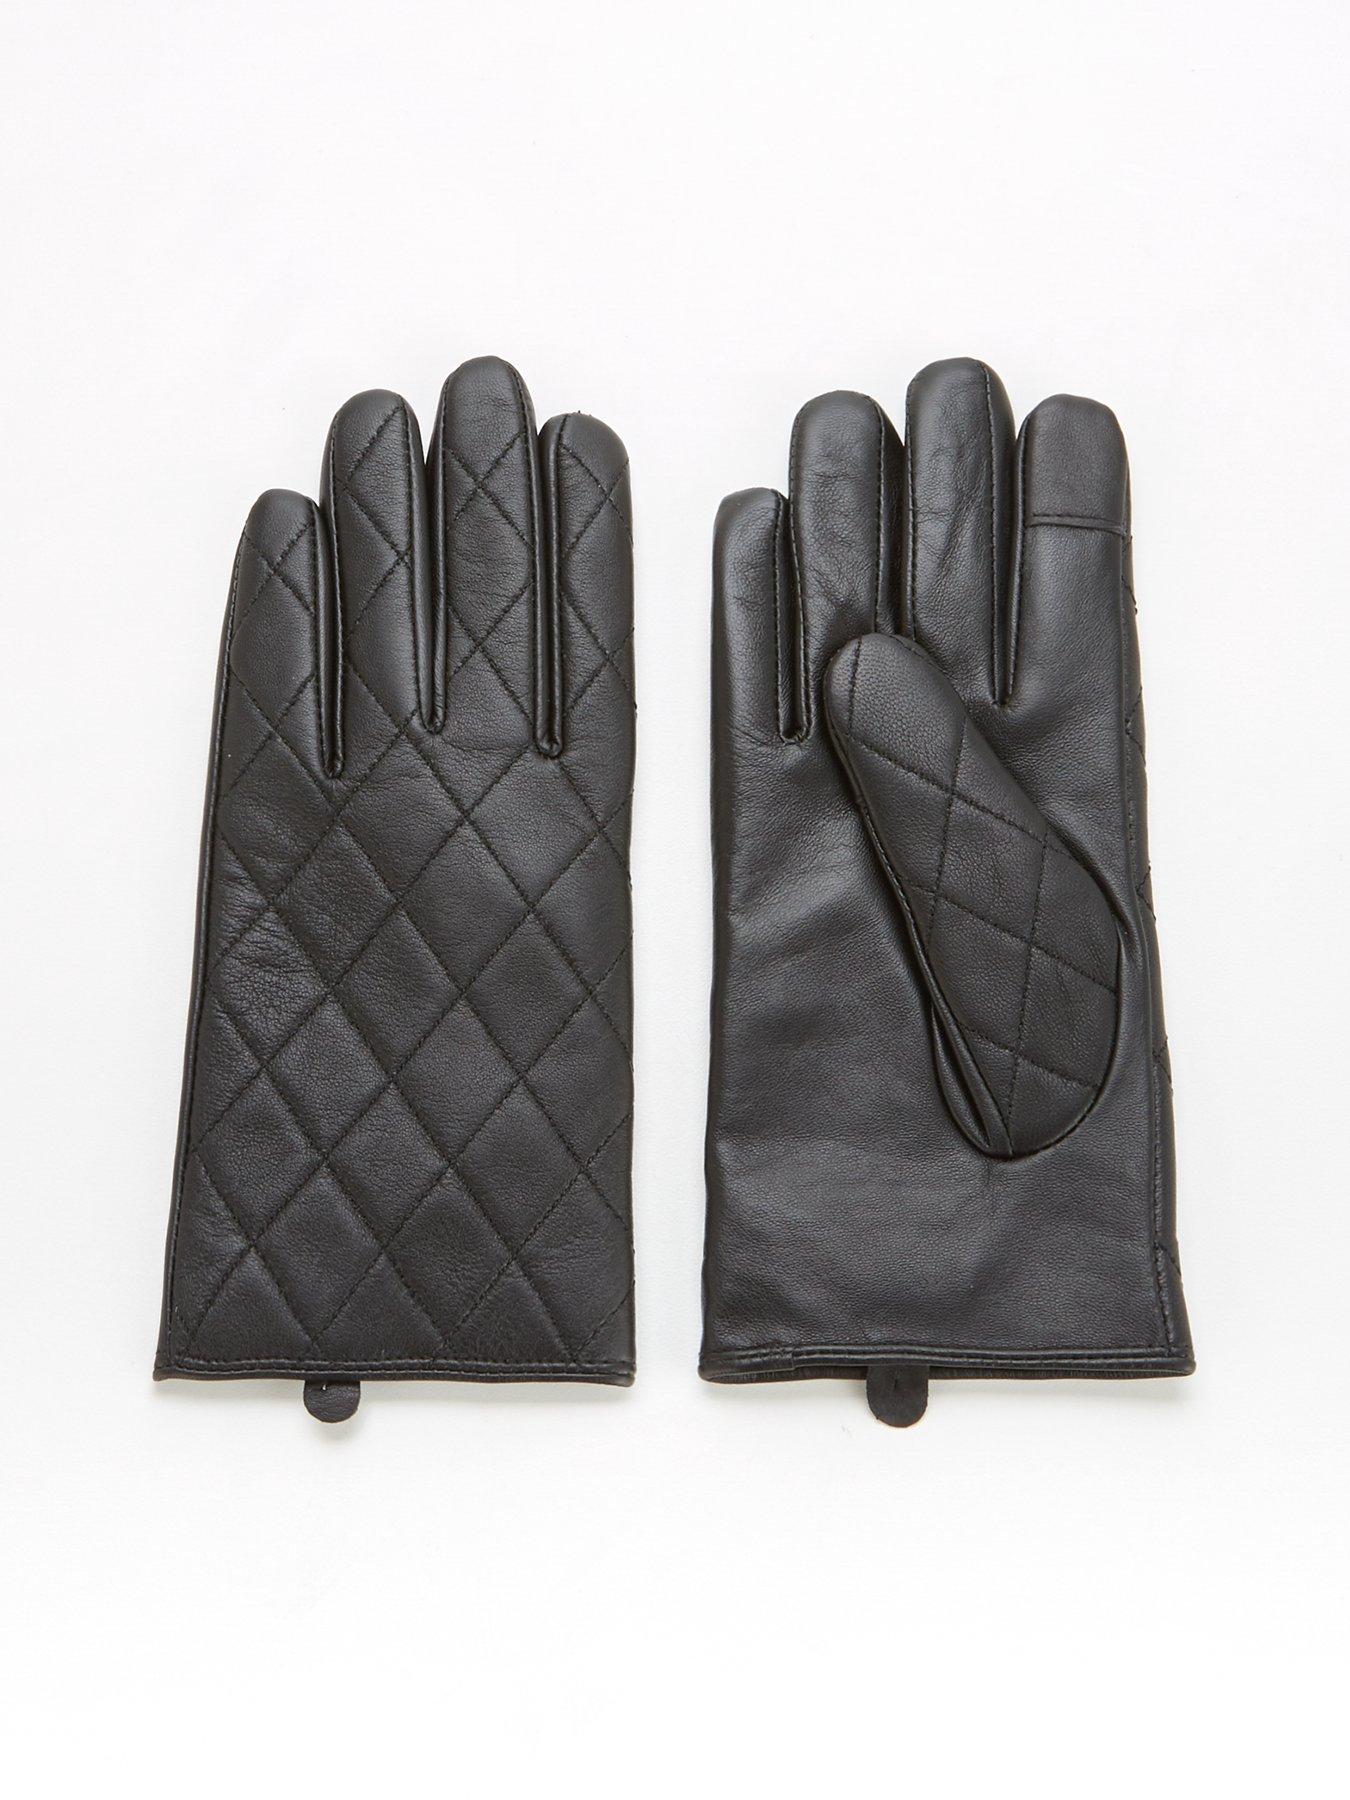 WOMEN FASHION Accessories Gloves Suiteblanco Black leather gloves discount 69% Black S 